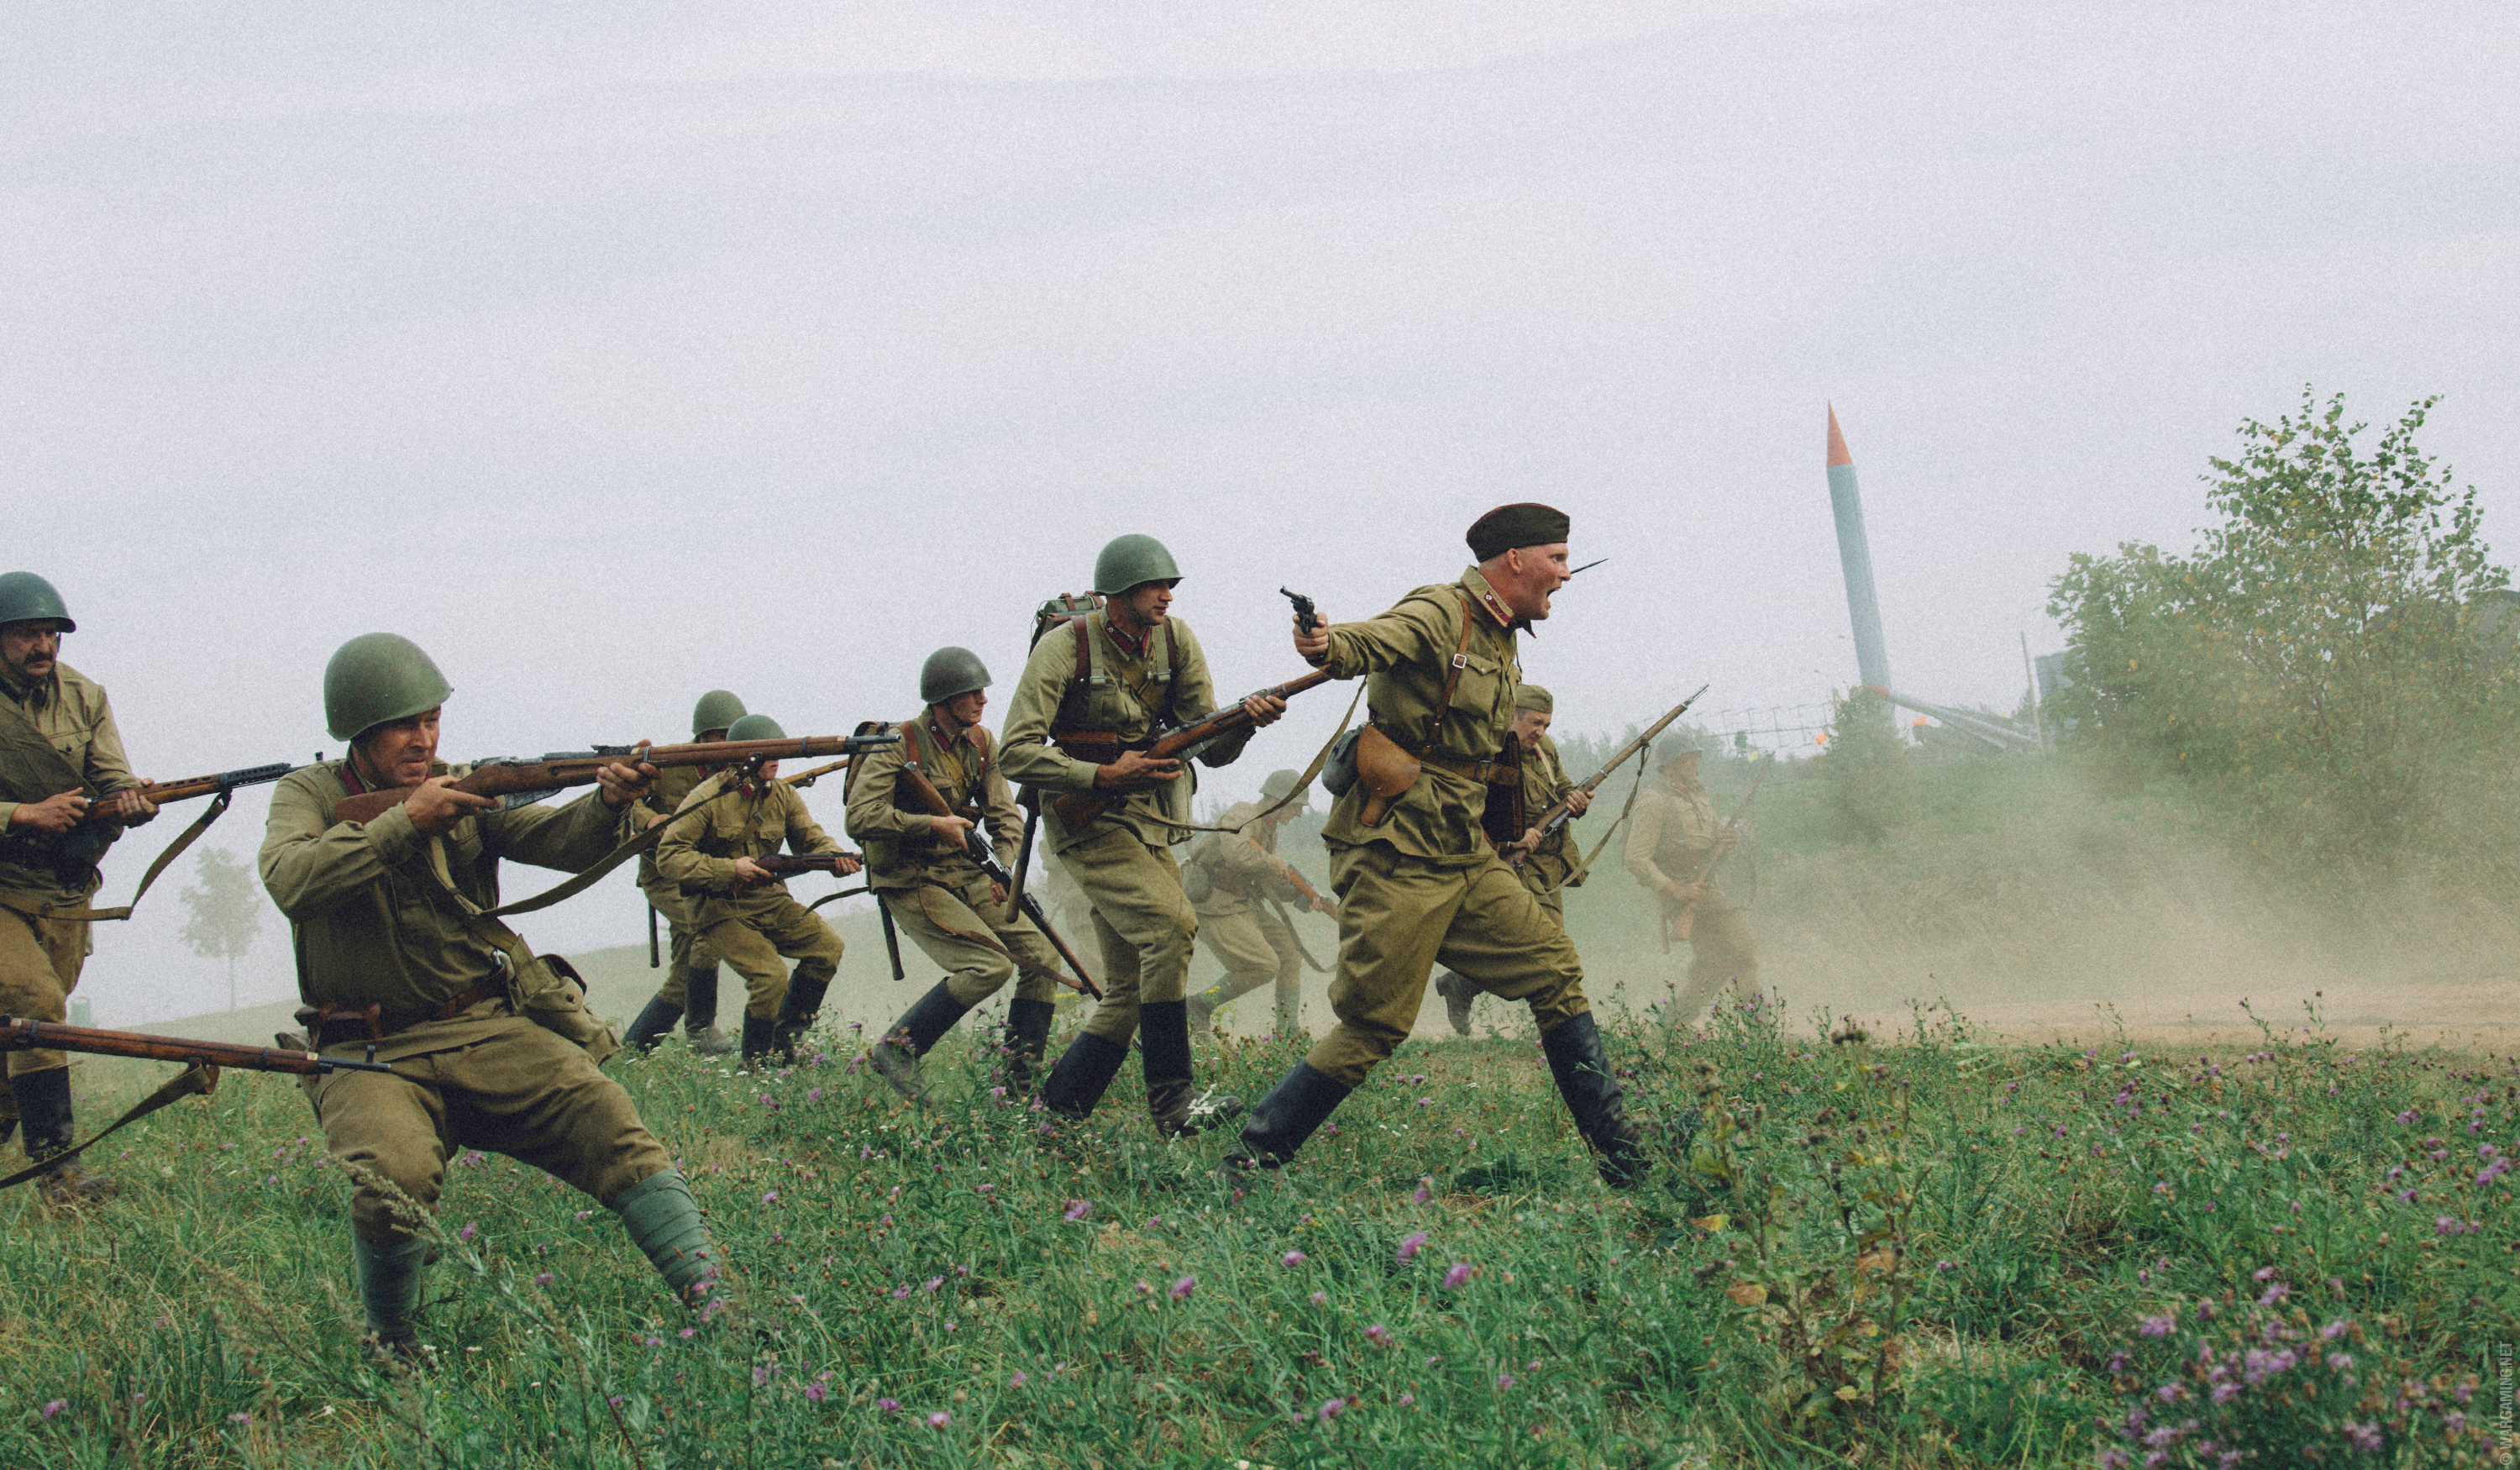 Нападение солдата. Солдаты бегут в атаку. Советские солдаты бегут в атаку. Атака пехоты.